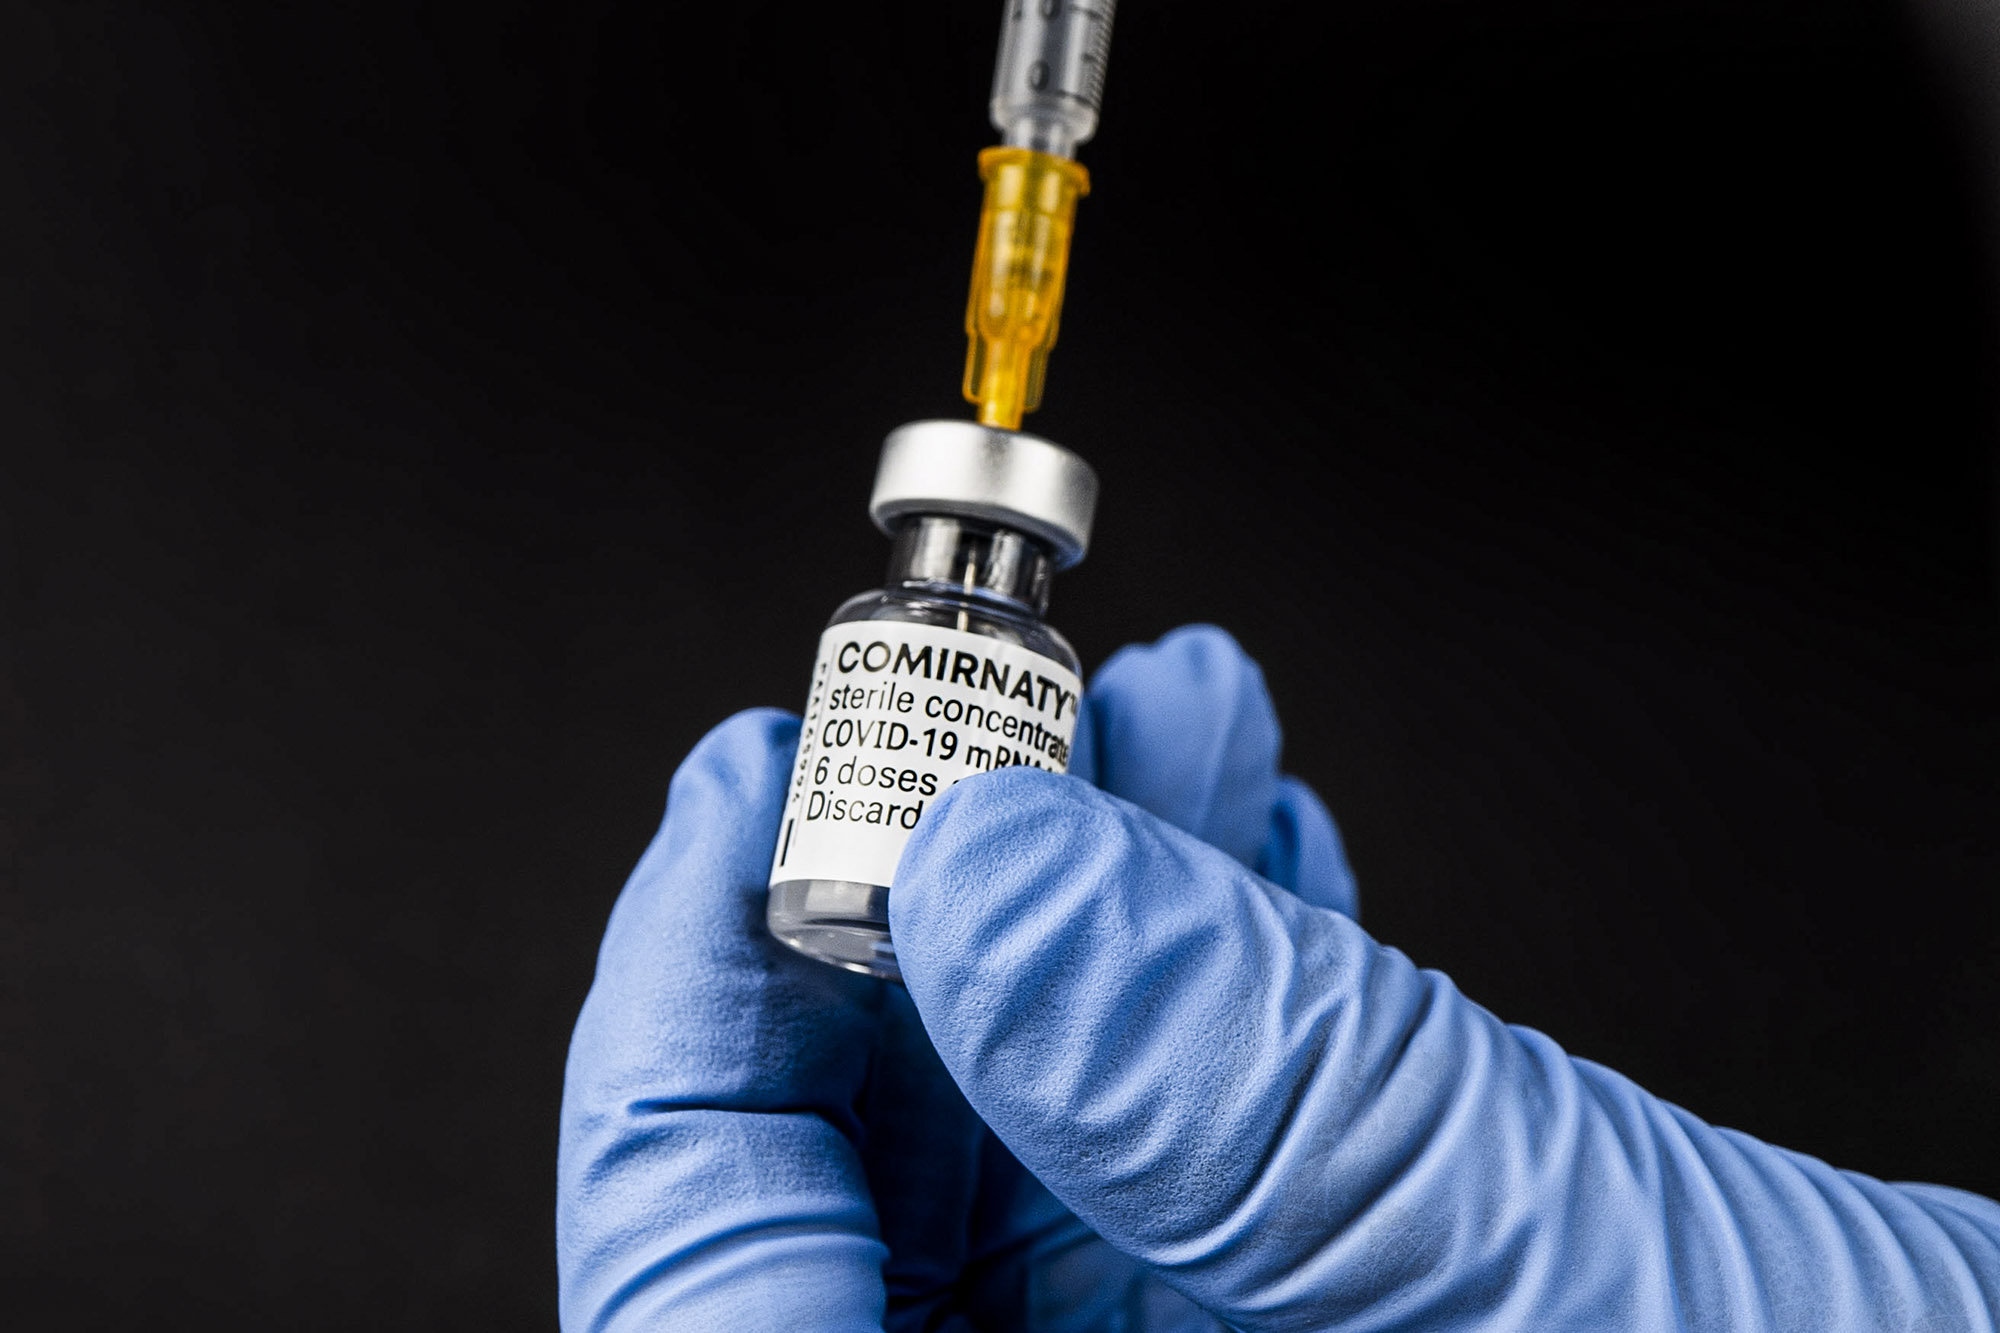 Syringe drawing up Covid-19 vaccine